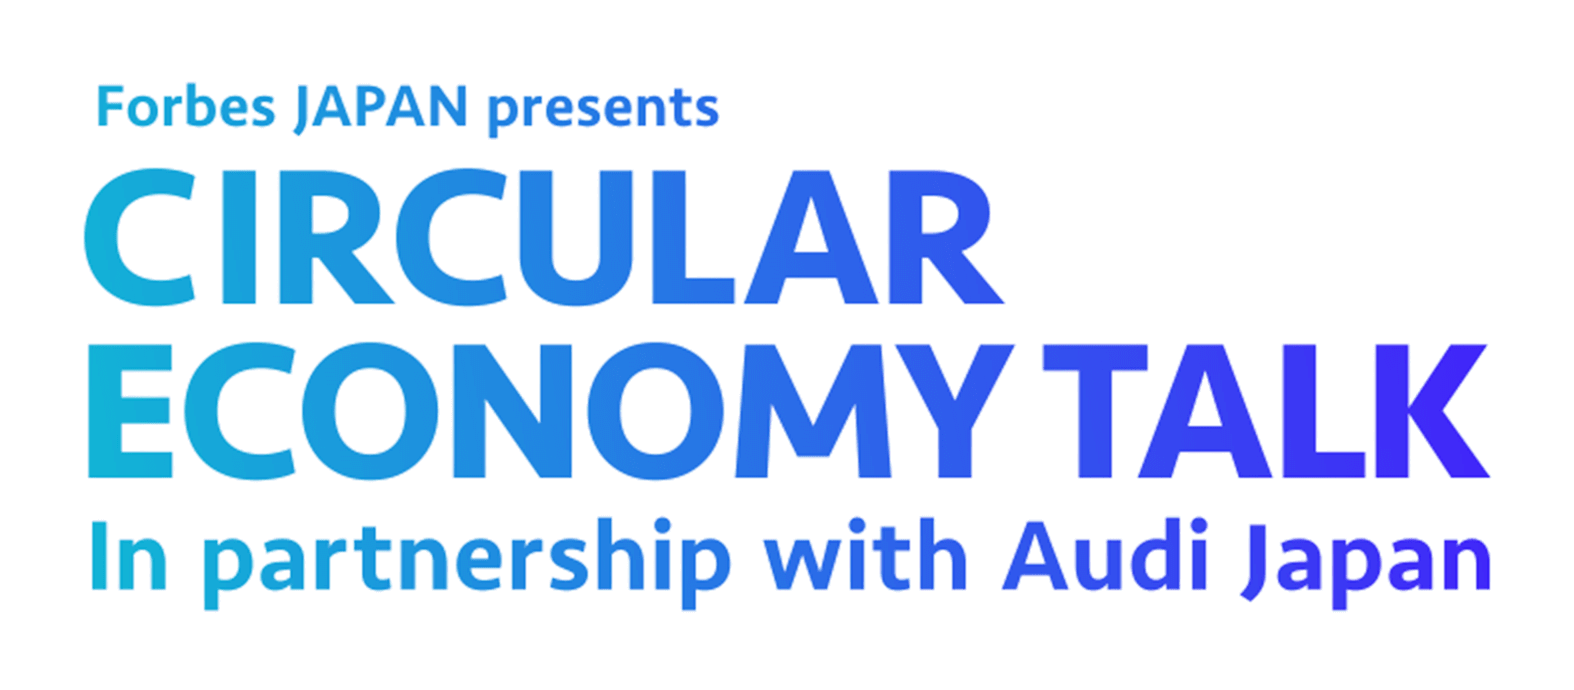 forbes japan presents circular economy talk in partnership with audi japan